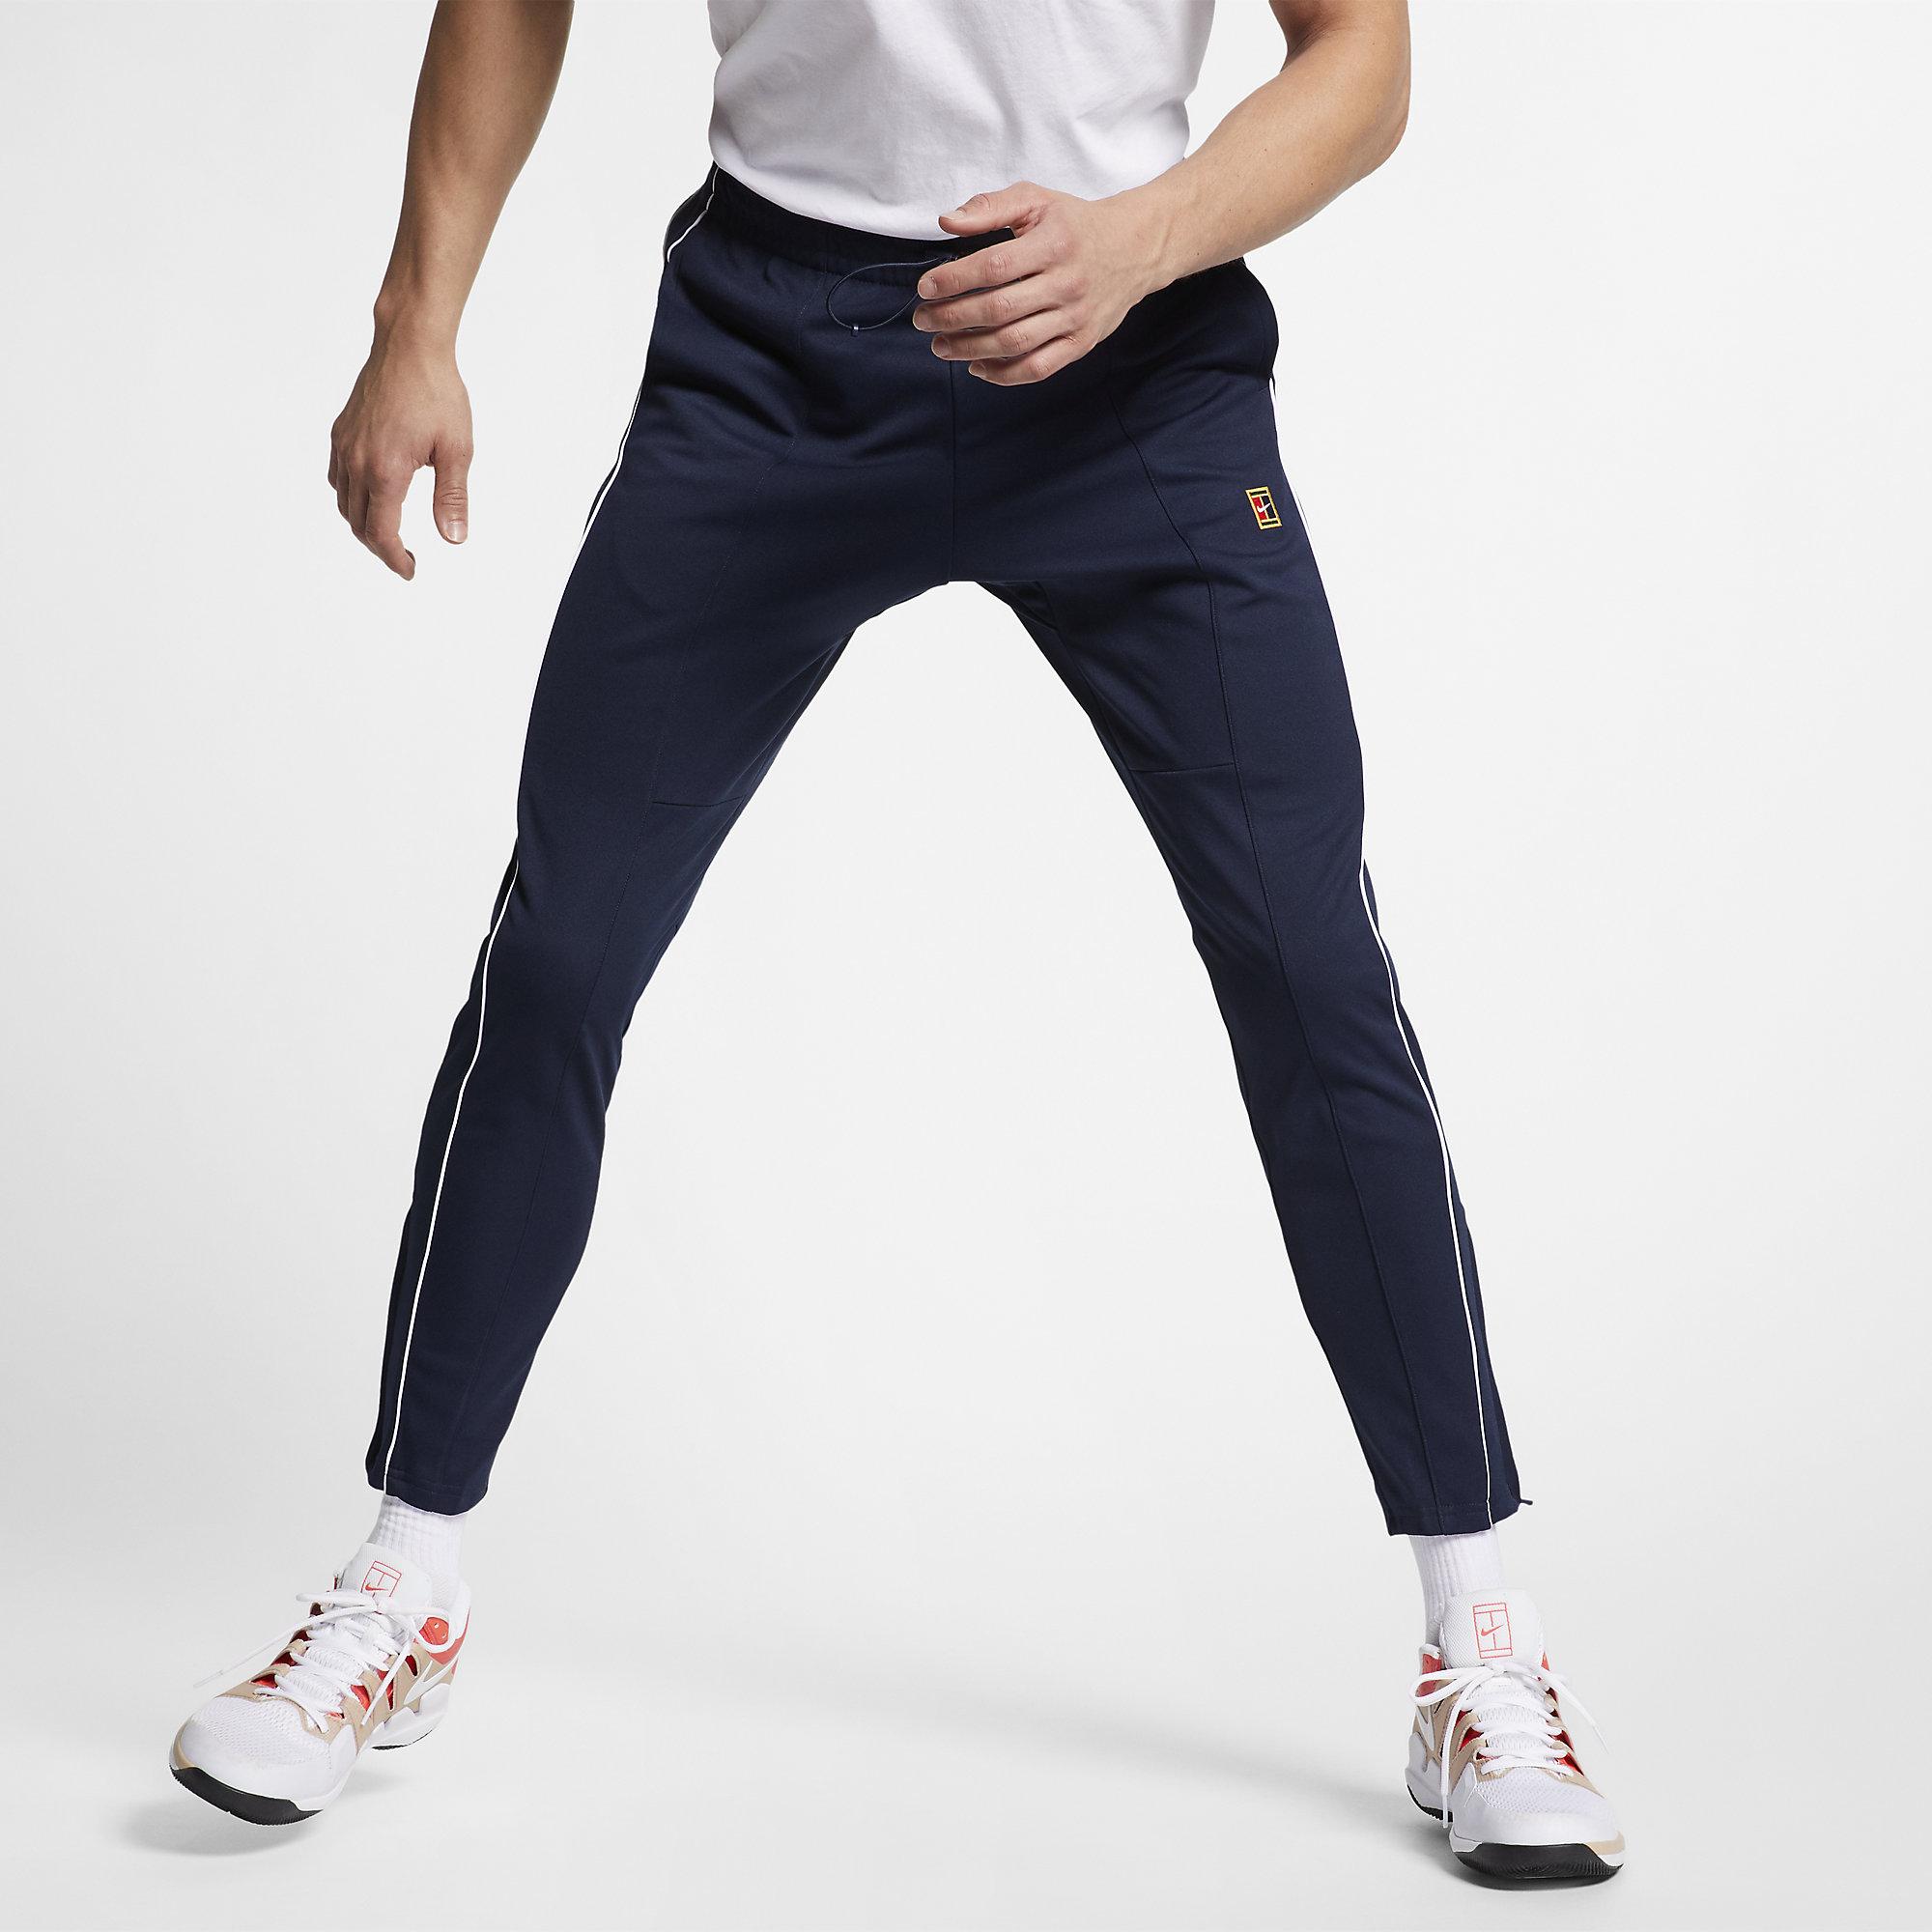 Nike Mens Tennis Pants - Obsidian/White